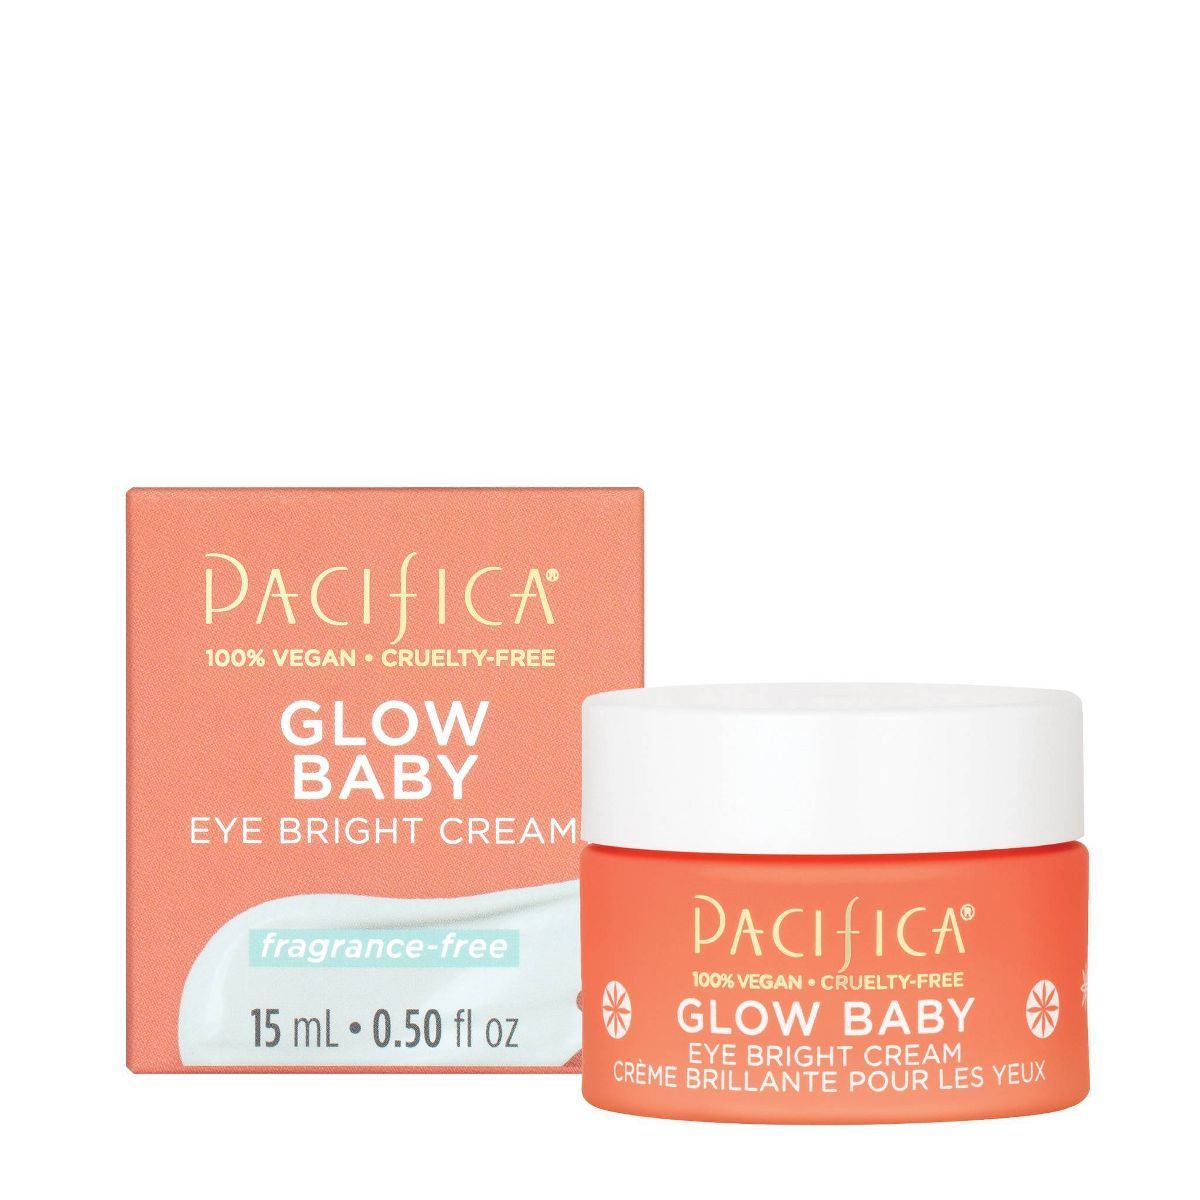 Pacifica Glow Baby Eye Bright Cream - 0.5 fl oz | Target